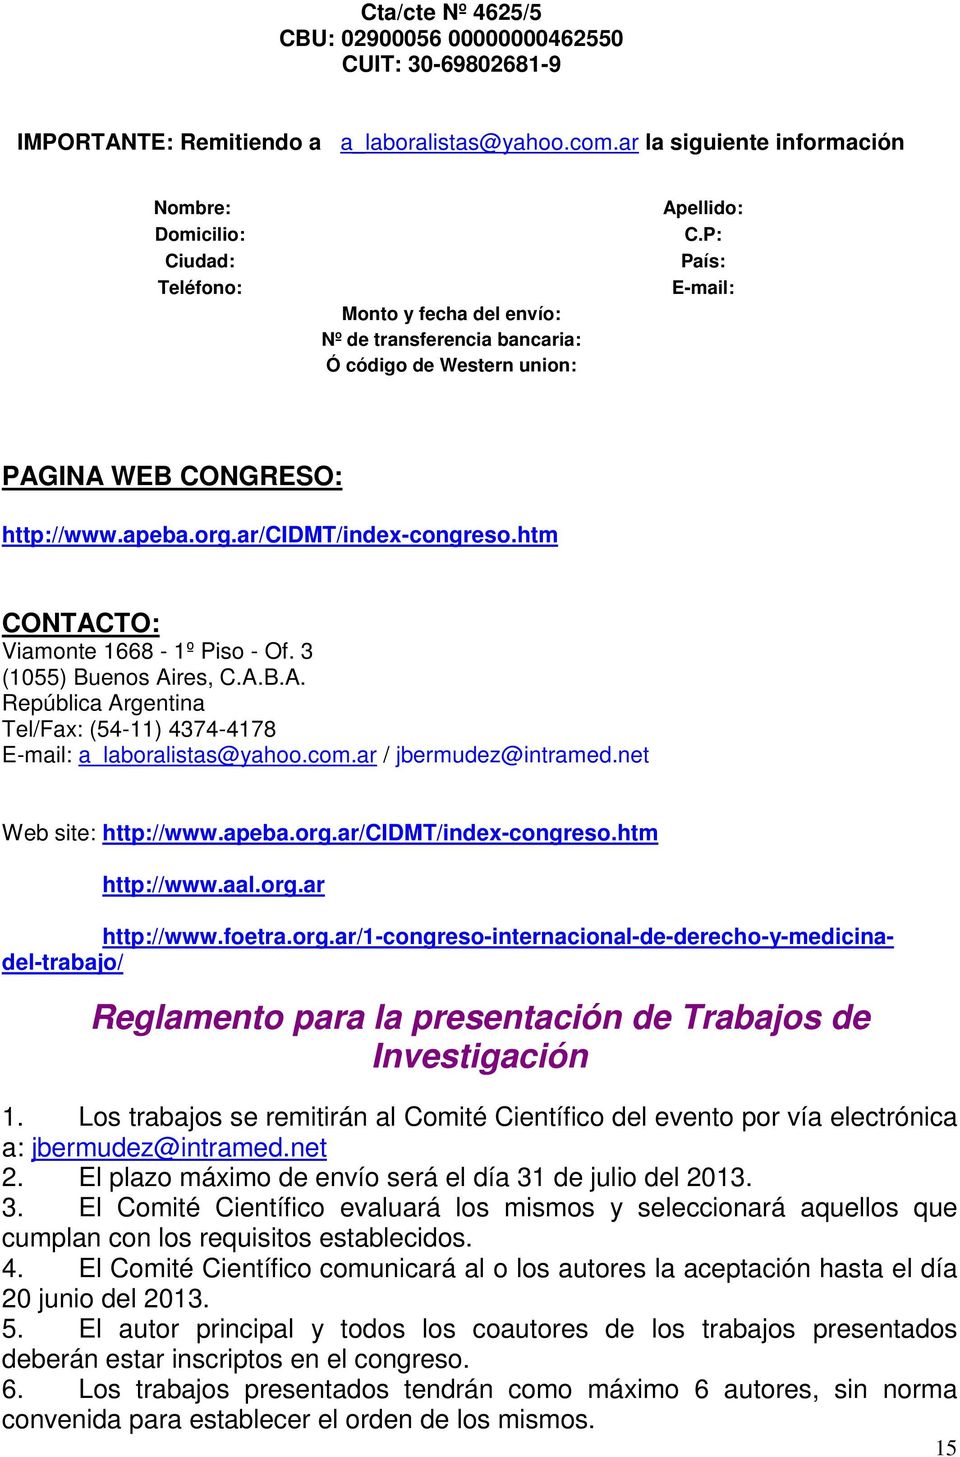 P: País: E-mail: PAGINA WEB CONGRESO: http://www.apeba.org.ar/cidmt/index-congreso.htm CONTACTO: Viamonte 1668-1º Piso - Of. 3 (1055) Buenos Aires, C.A.B.A. República Argentina Tel/Fax: (54-11) 4374-4178 E-mail: a_laboralistas@yahoo.